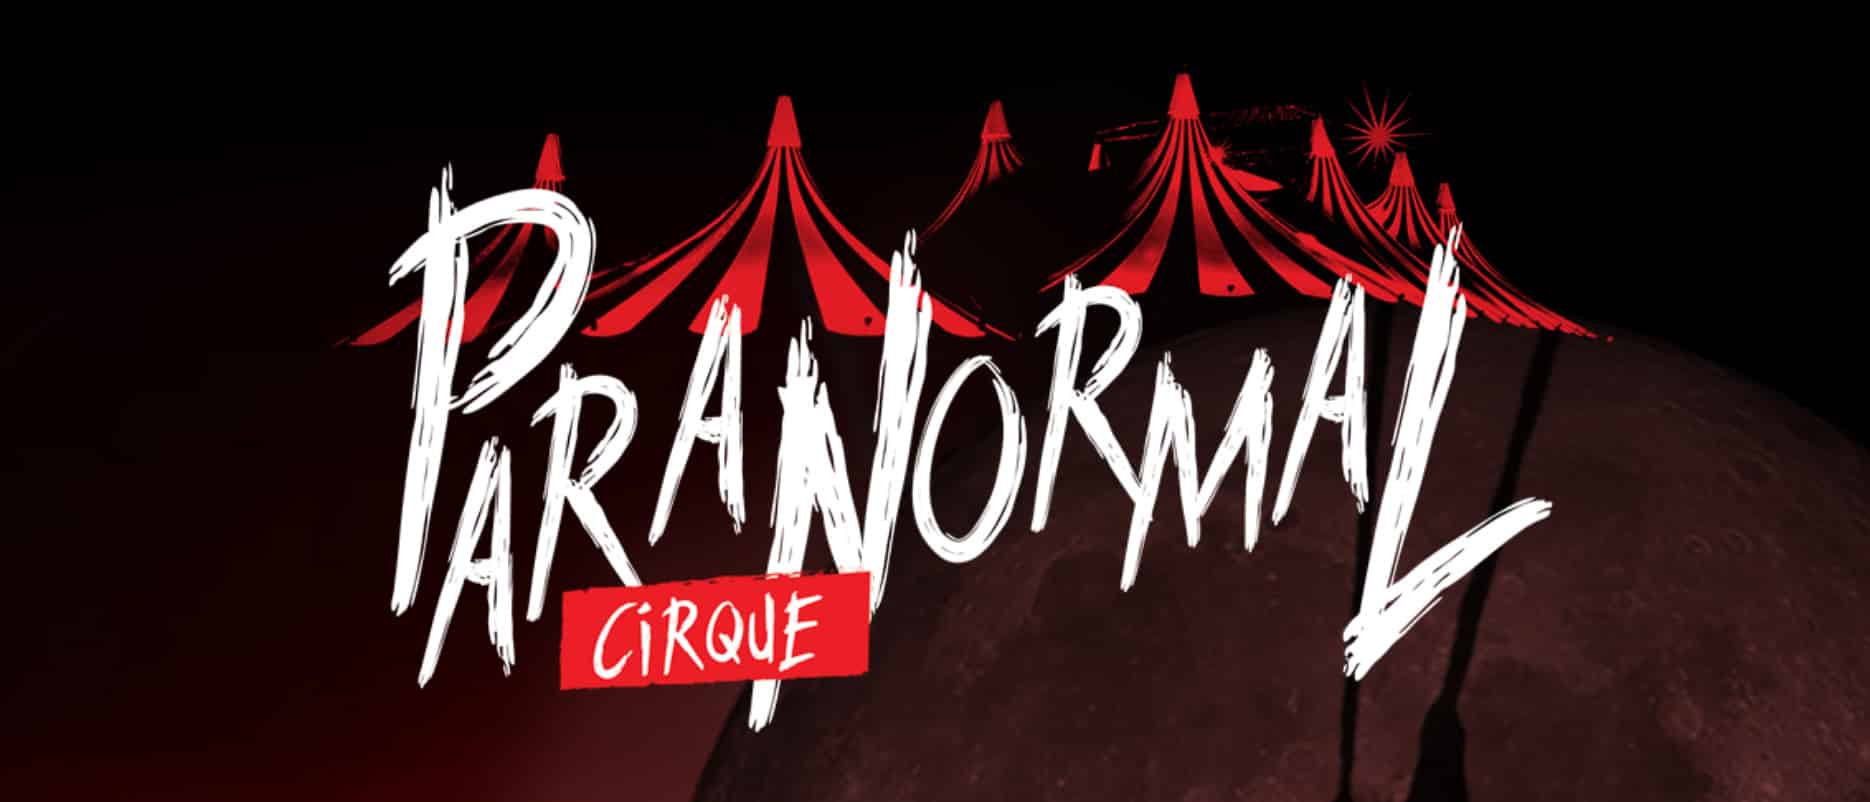 Paranormal Circque in Ventura, California